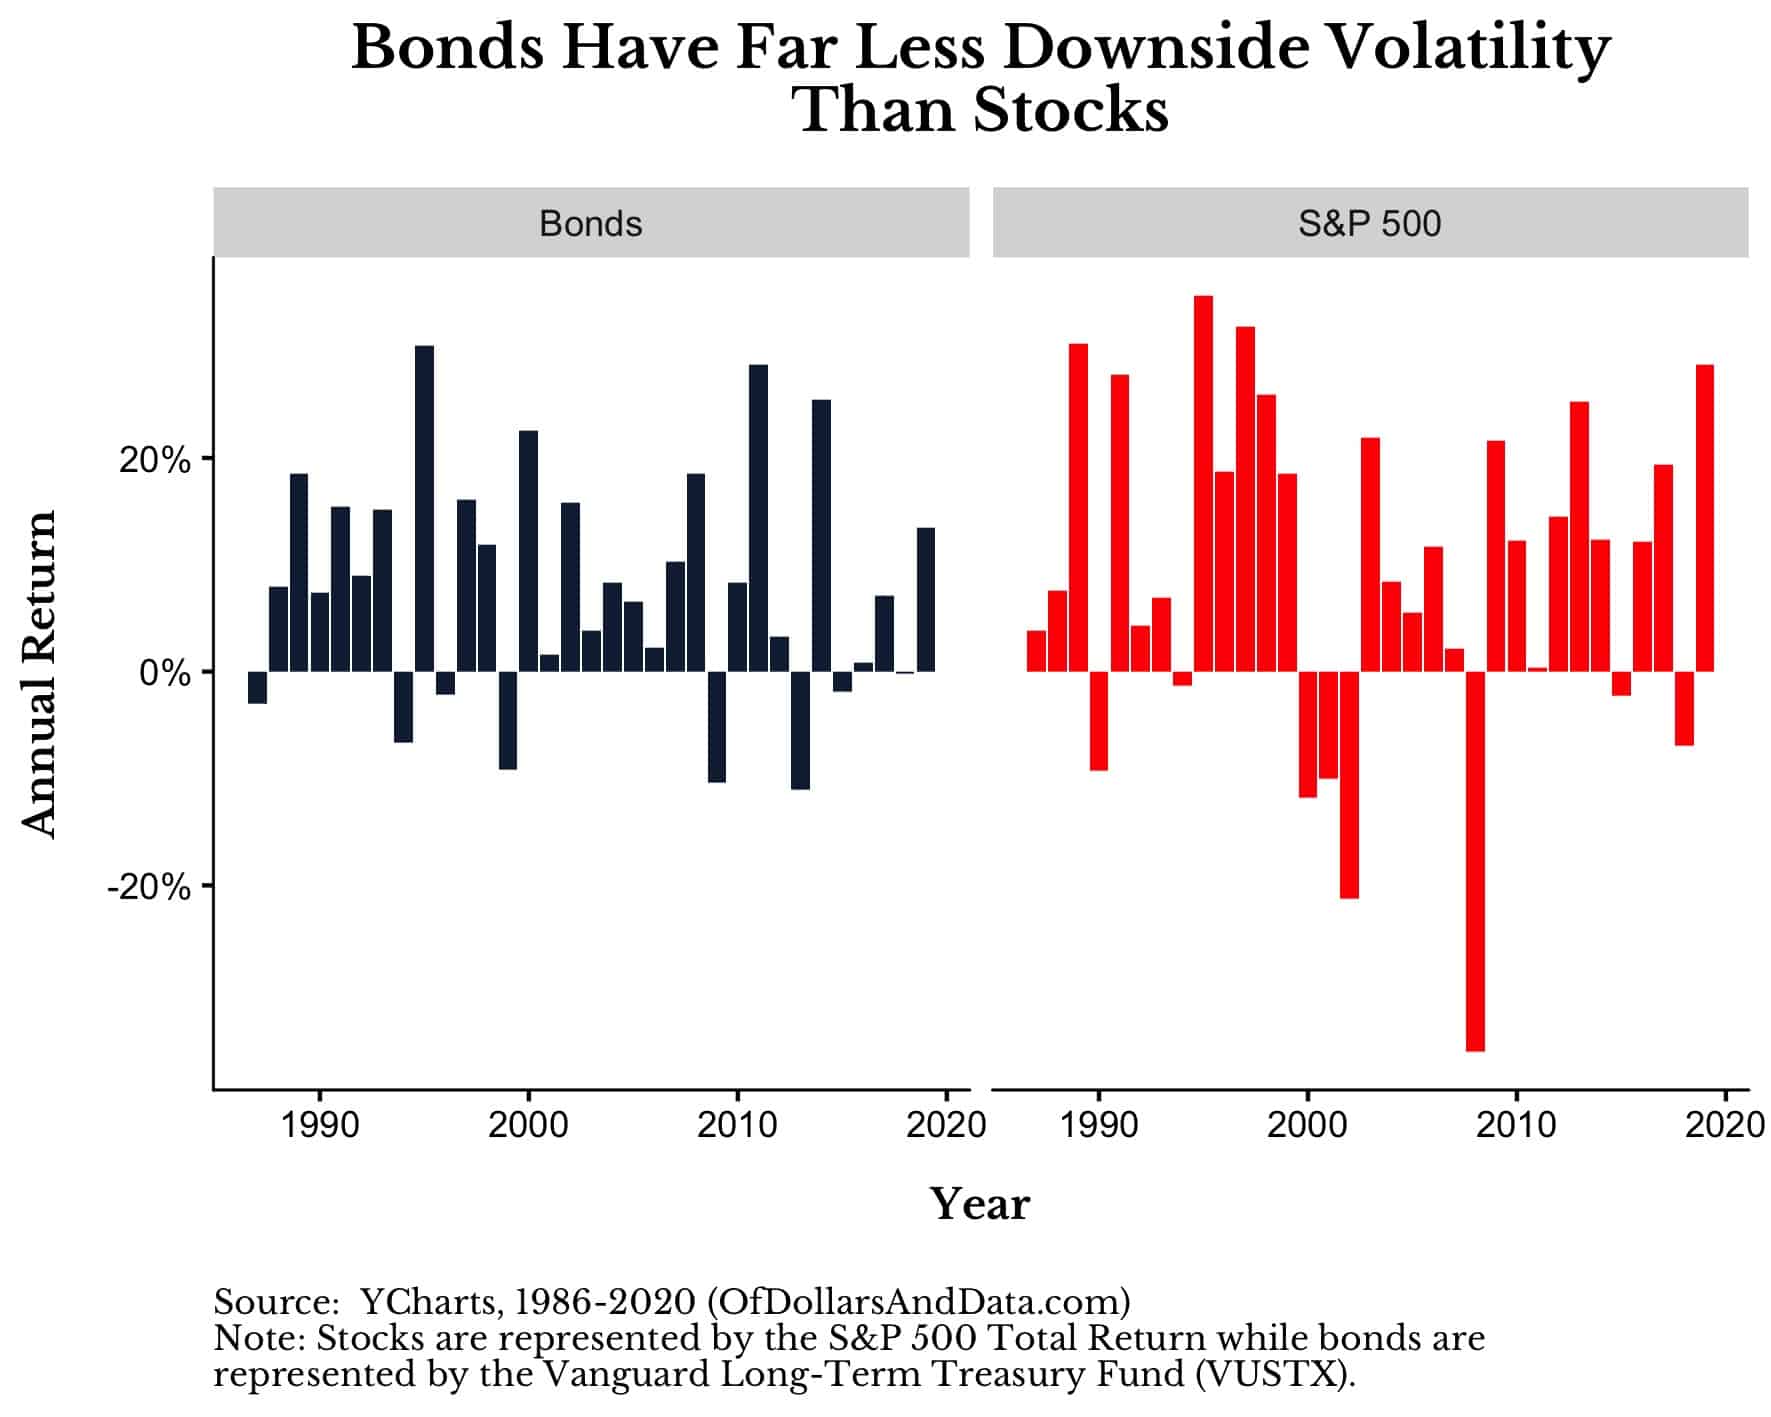 Bonds have far less downside volatility than stocks